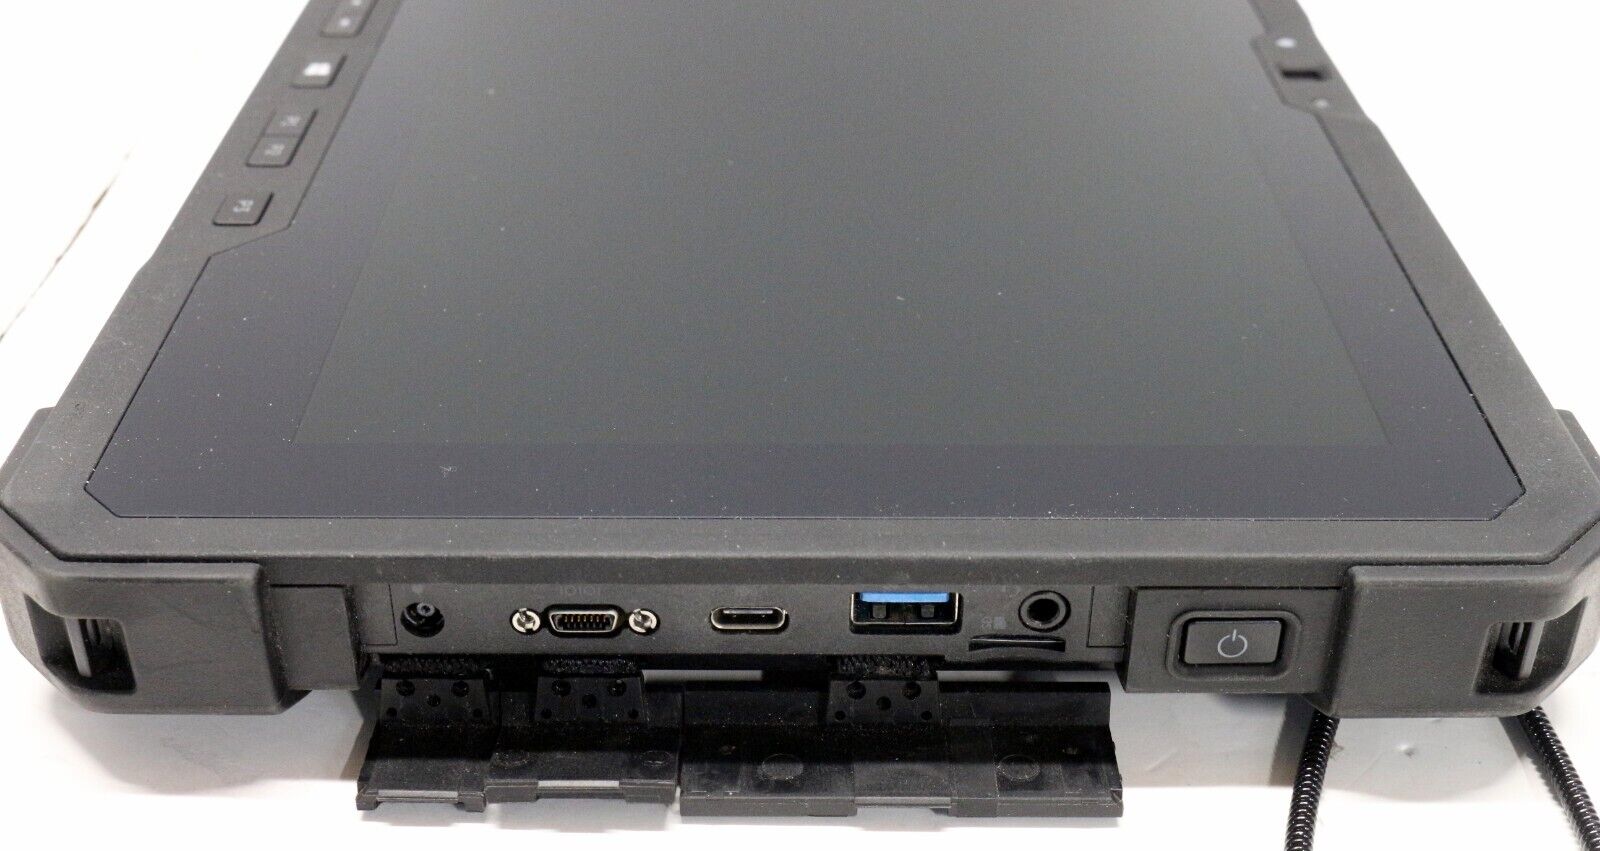 Dell Latitude Rugged Extreme 7212 Tablet I5-7300u 2.60GHz 8GB 256 SSD Grade B